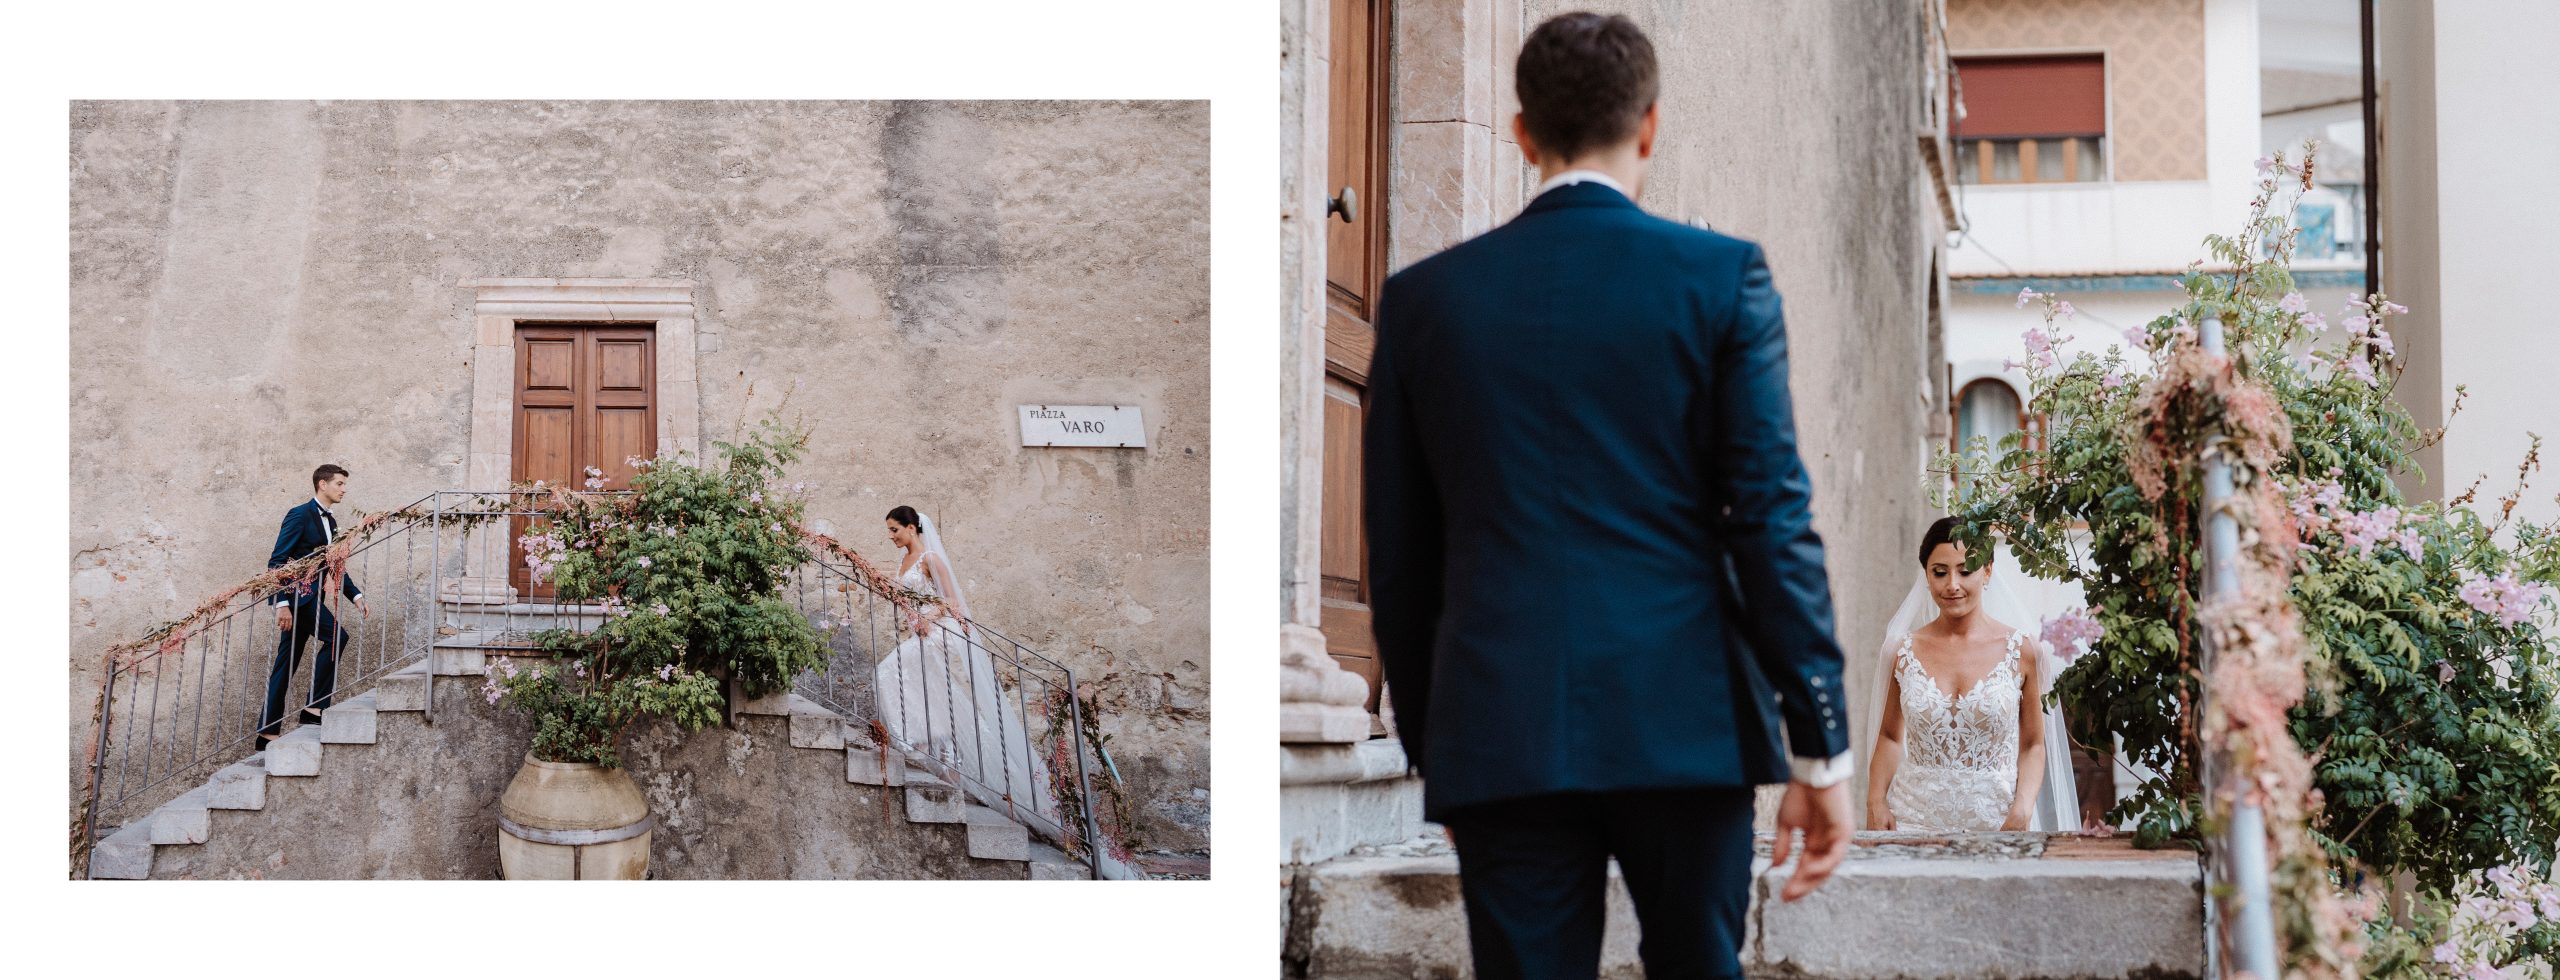 Jan e Melania 36 scaled - fotografo matrimonio catania